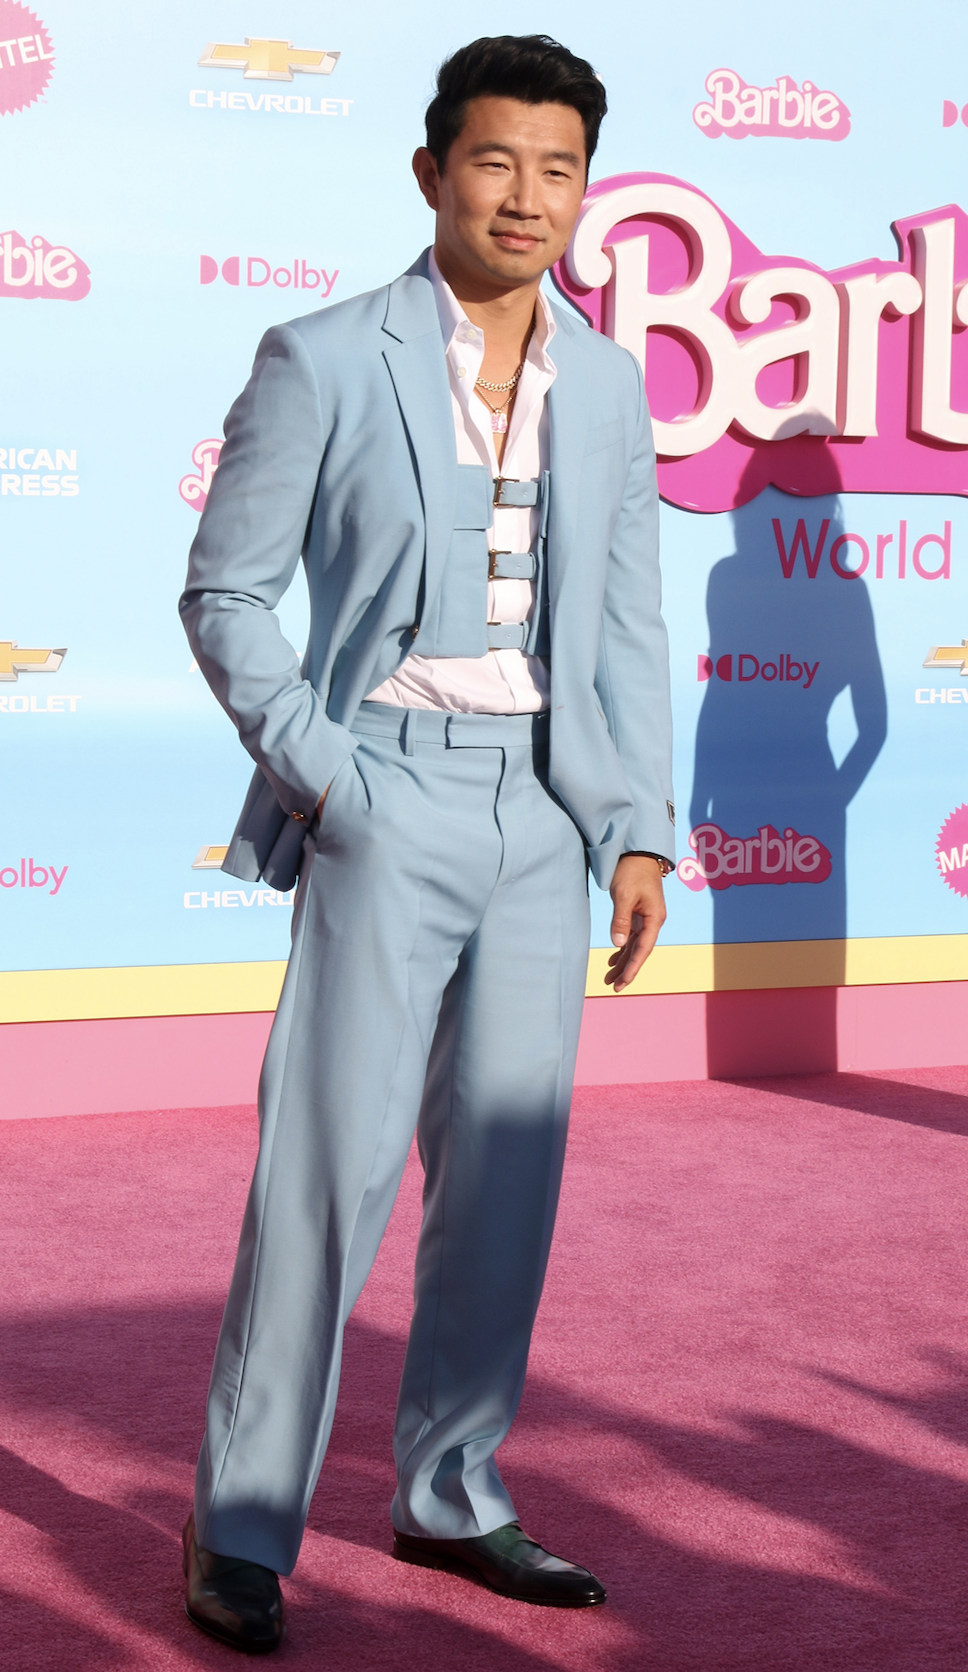 SIMU LIU wore VERSACE to attend the premiere of the ‘Barbie’ movie.